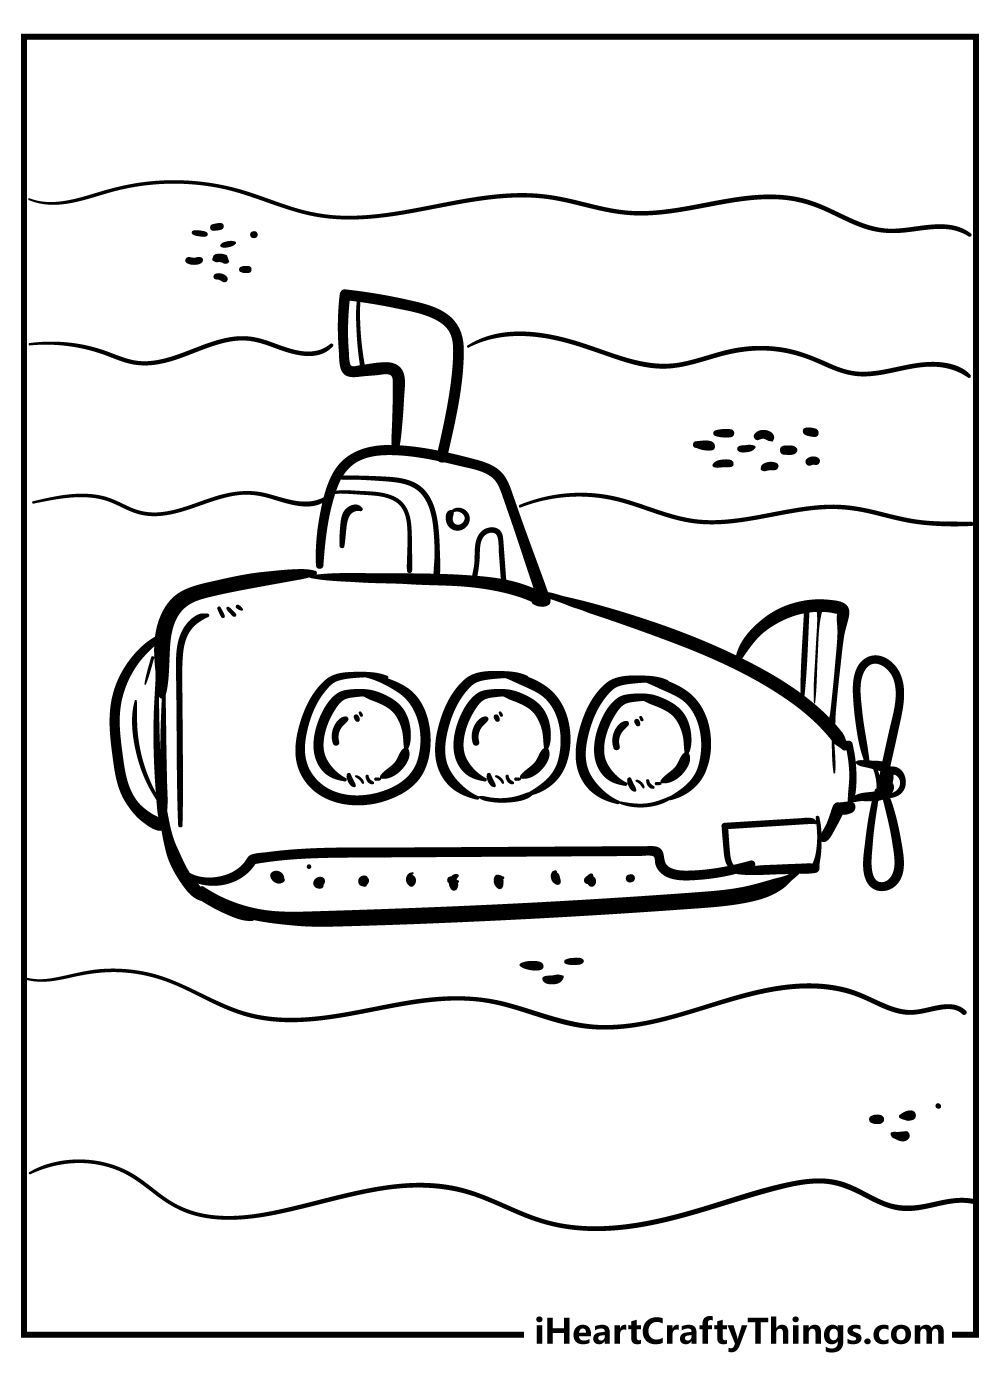 Submarine Coloring Original Sheet for children free download